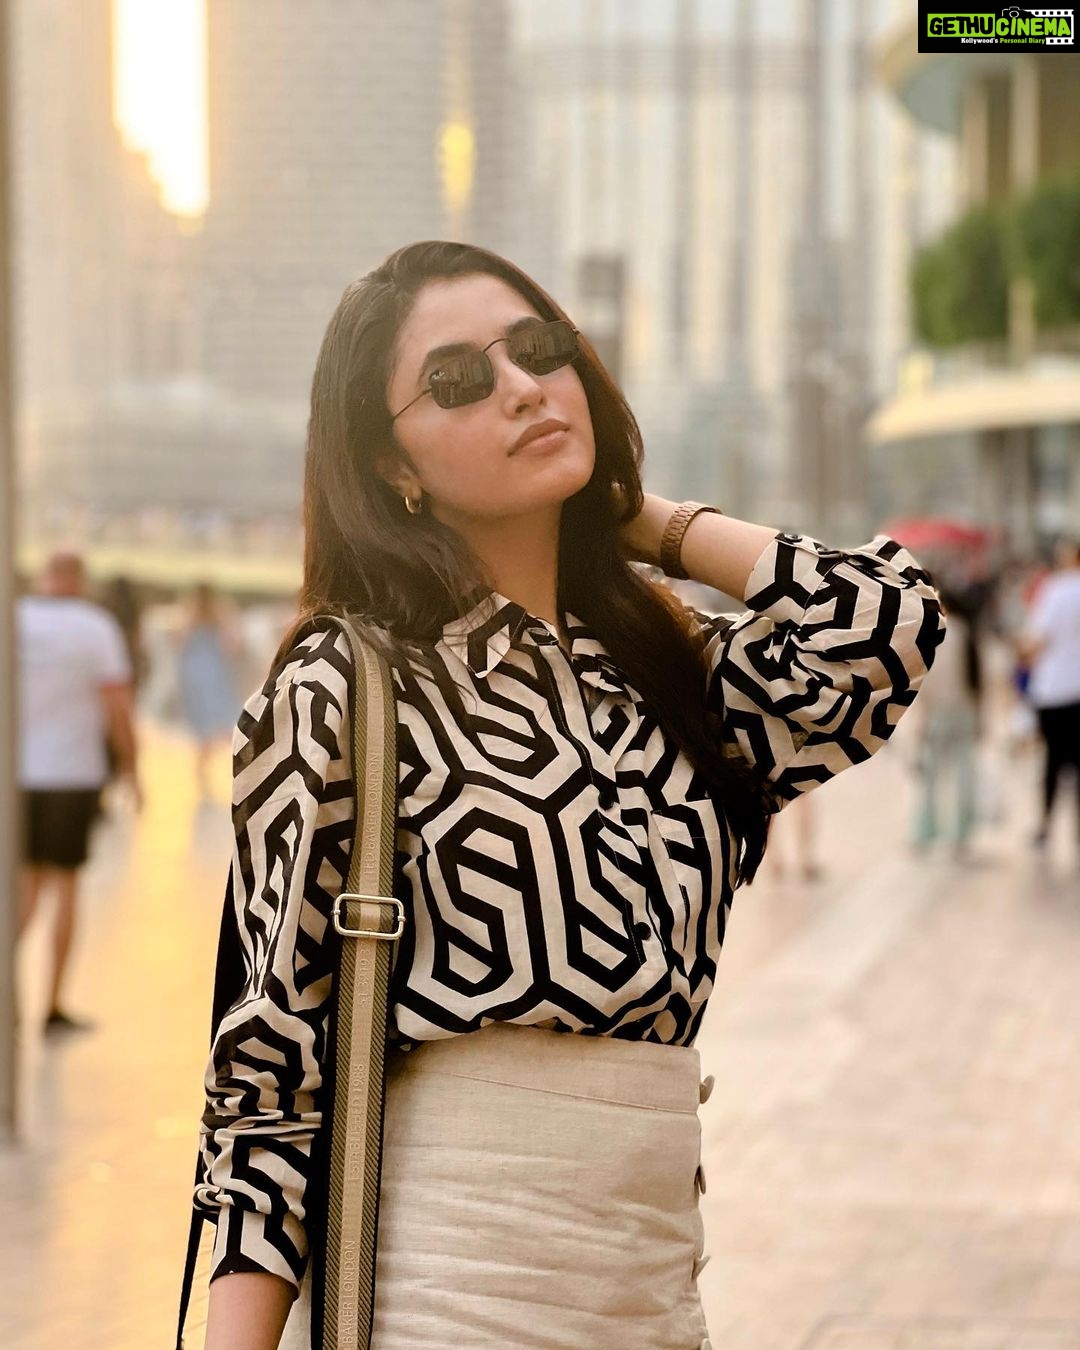 Priyanka Mohan - 1 Million Likes - Most Liked Instagram Photos